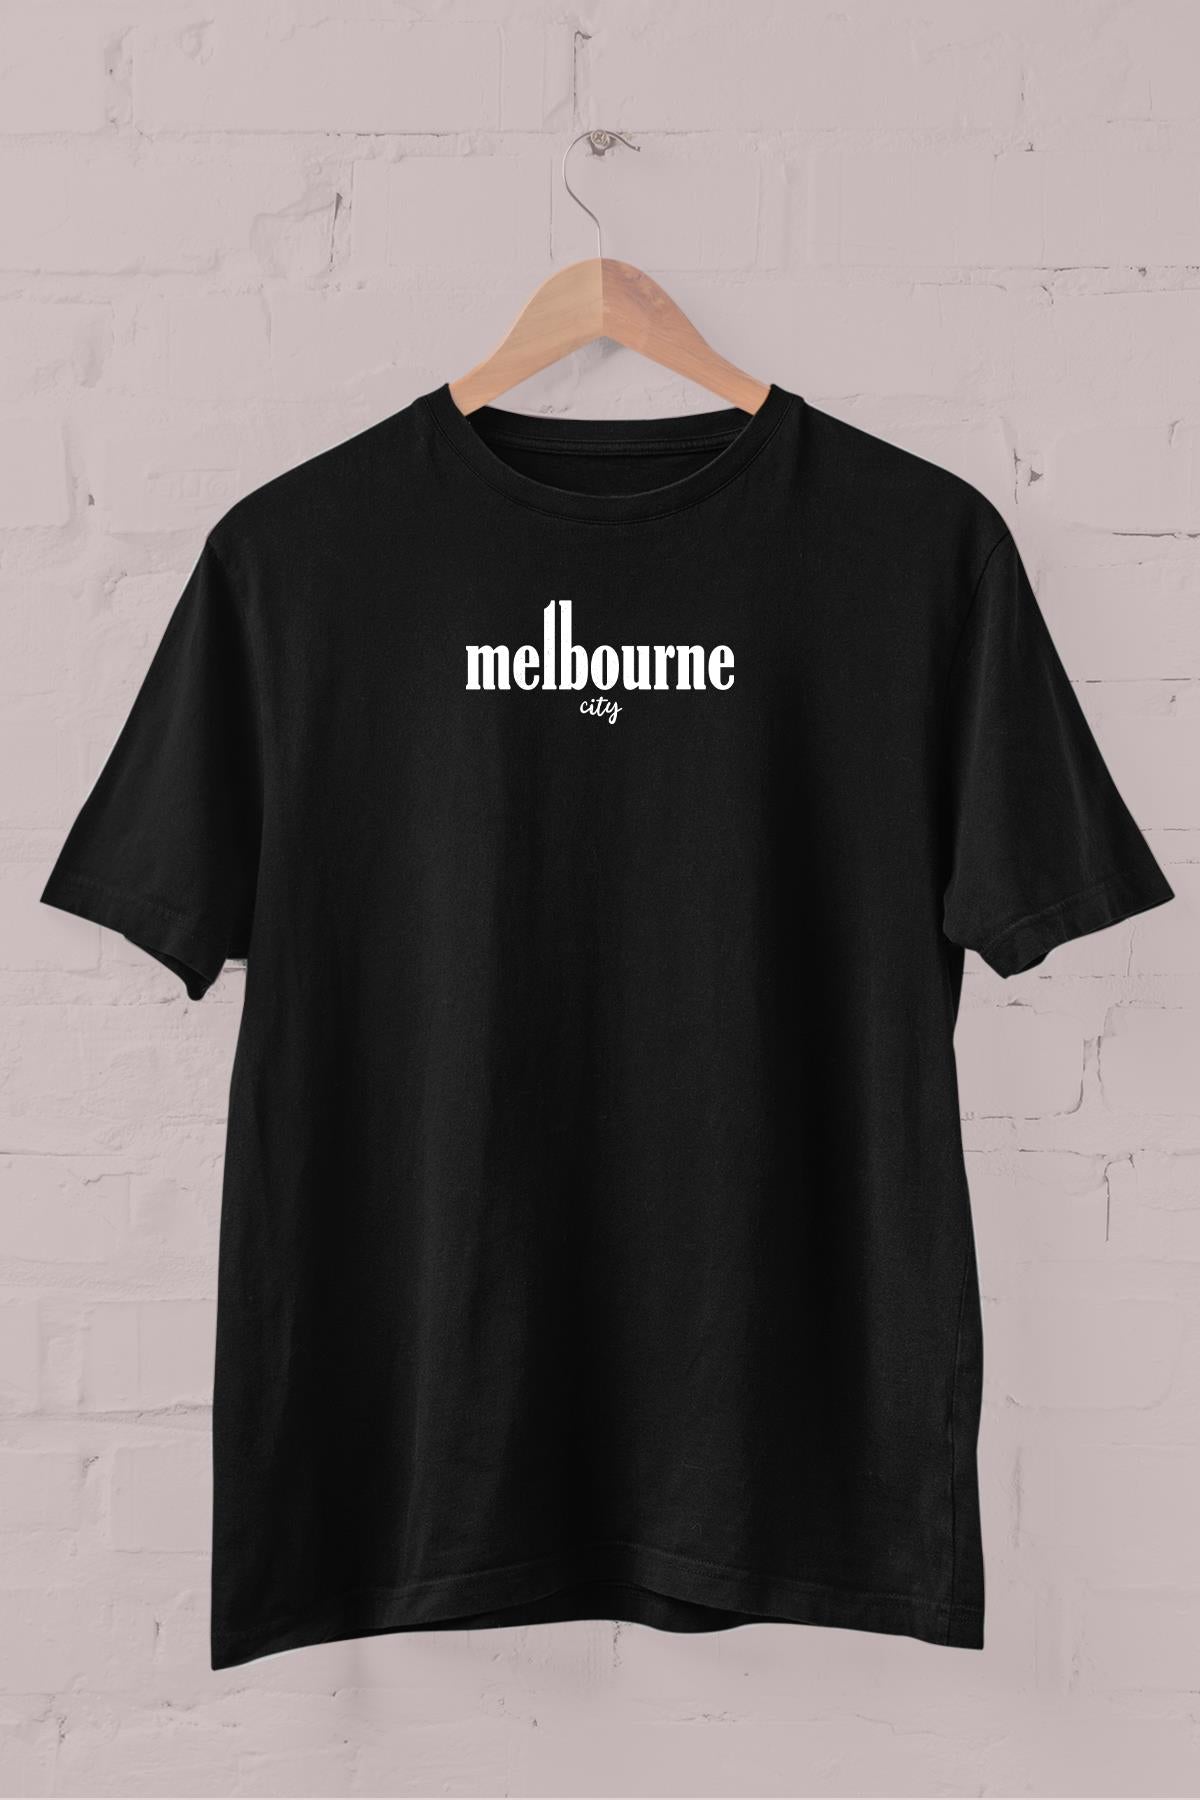 Melbourne printed Crew Neck men's t -shirt